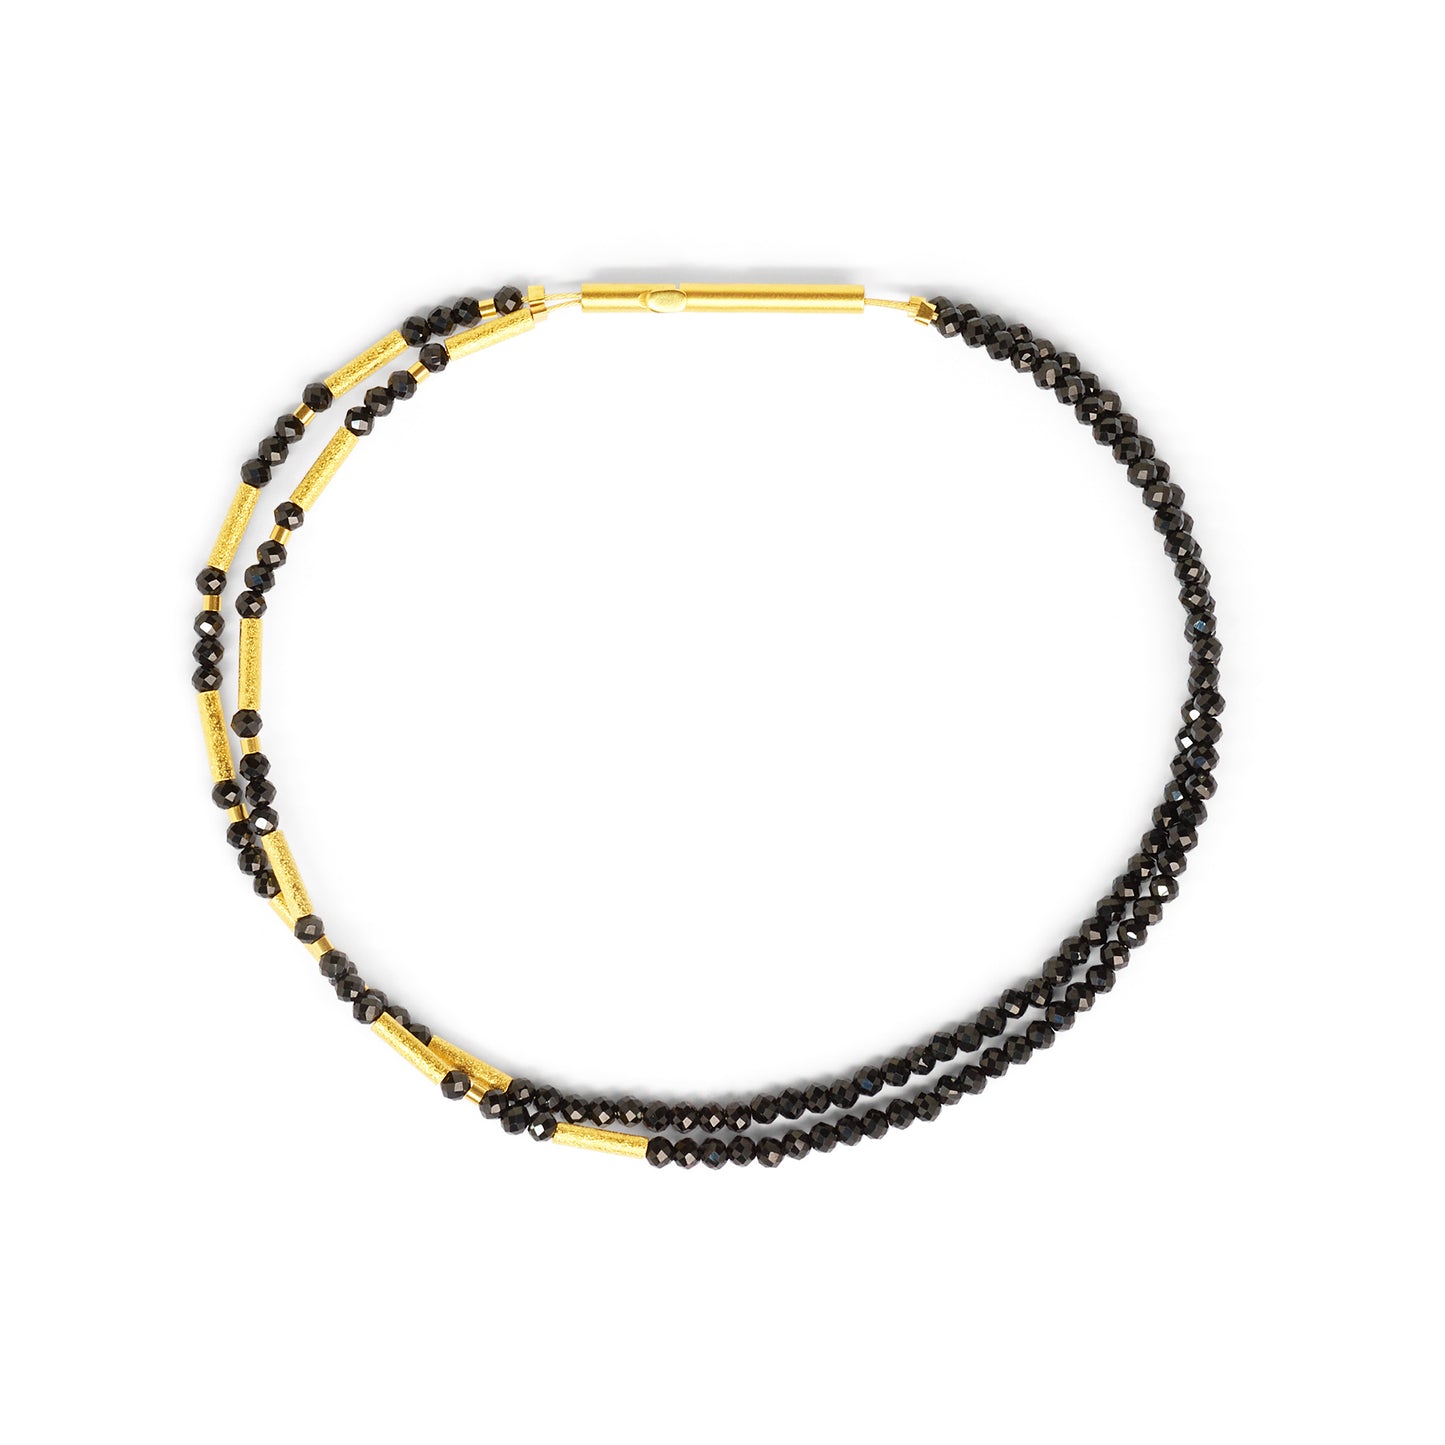 Bernd Wolf Collection "Clini" Black Spinel Bracelet